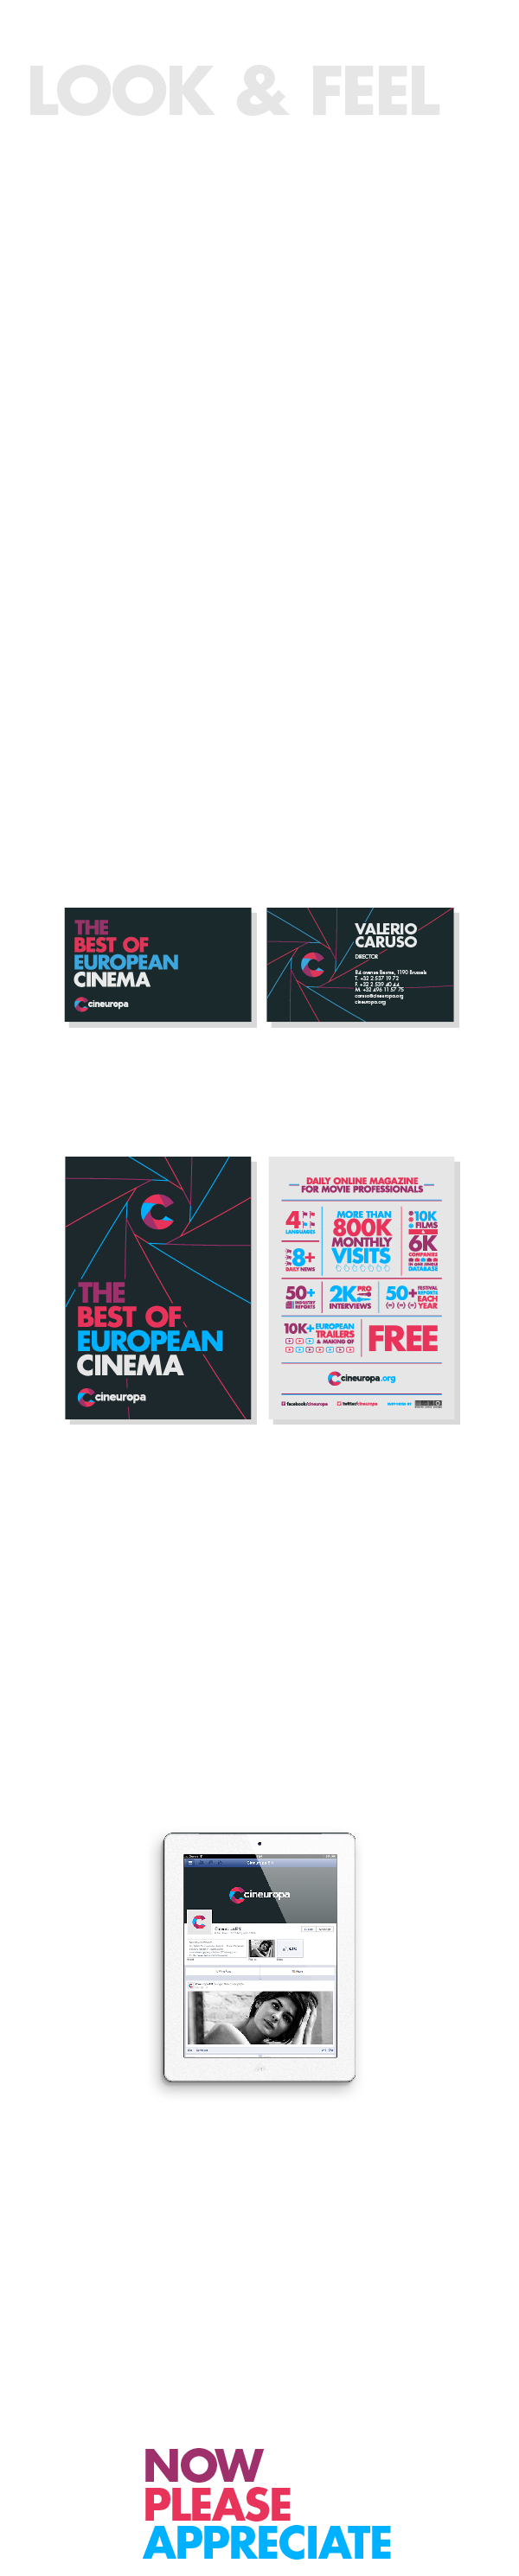 cineuropa Cinema Europe Independent FILMING Movies movie europa madrid spain indie cine independiente